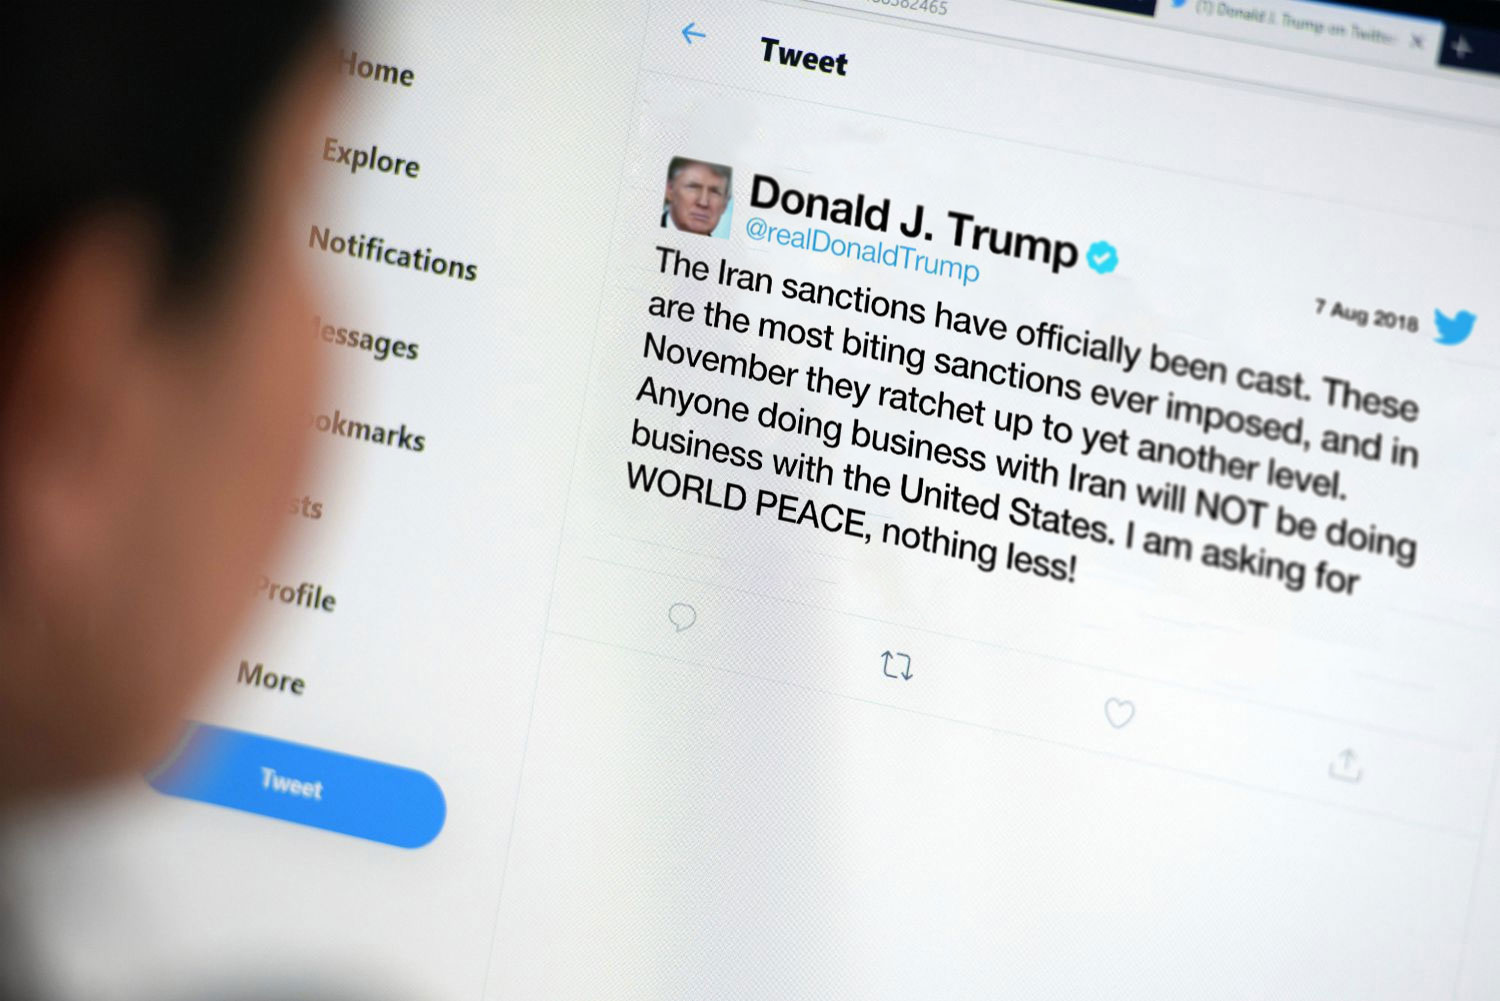 Trump's tweet about sanctions against Iran